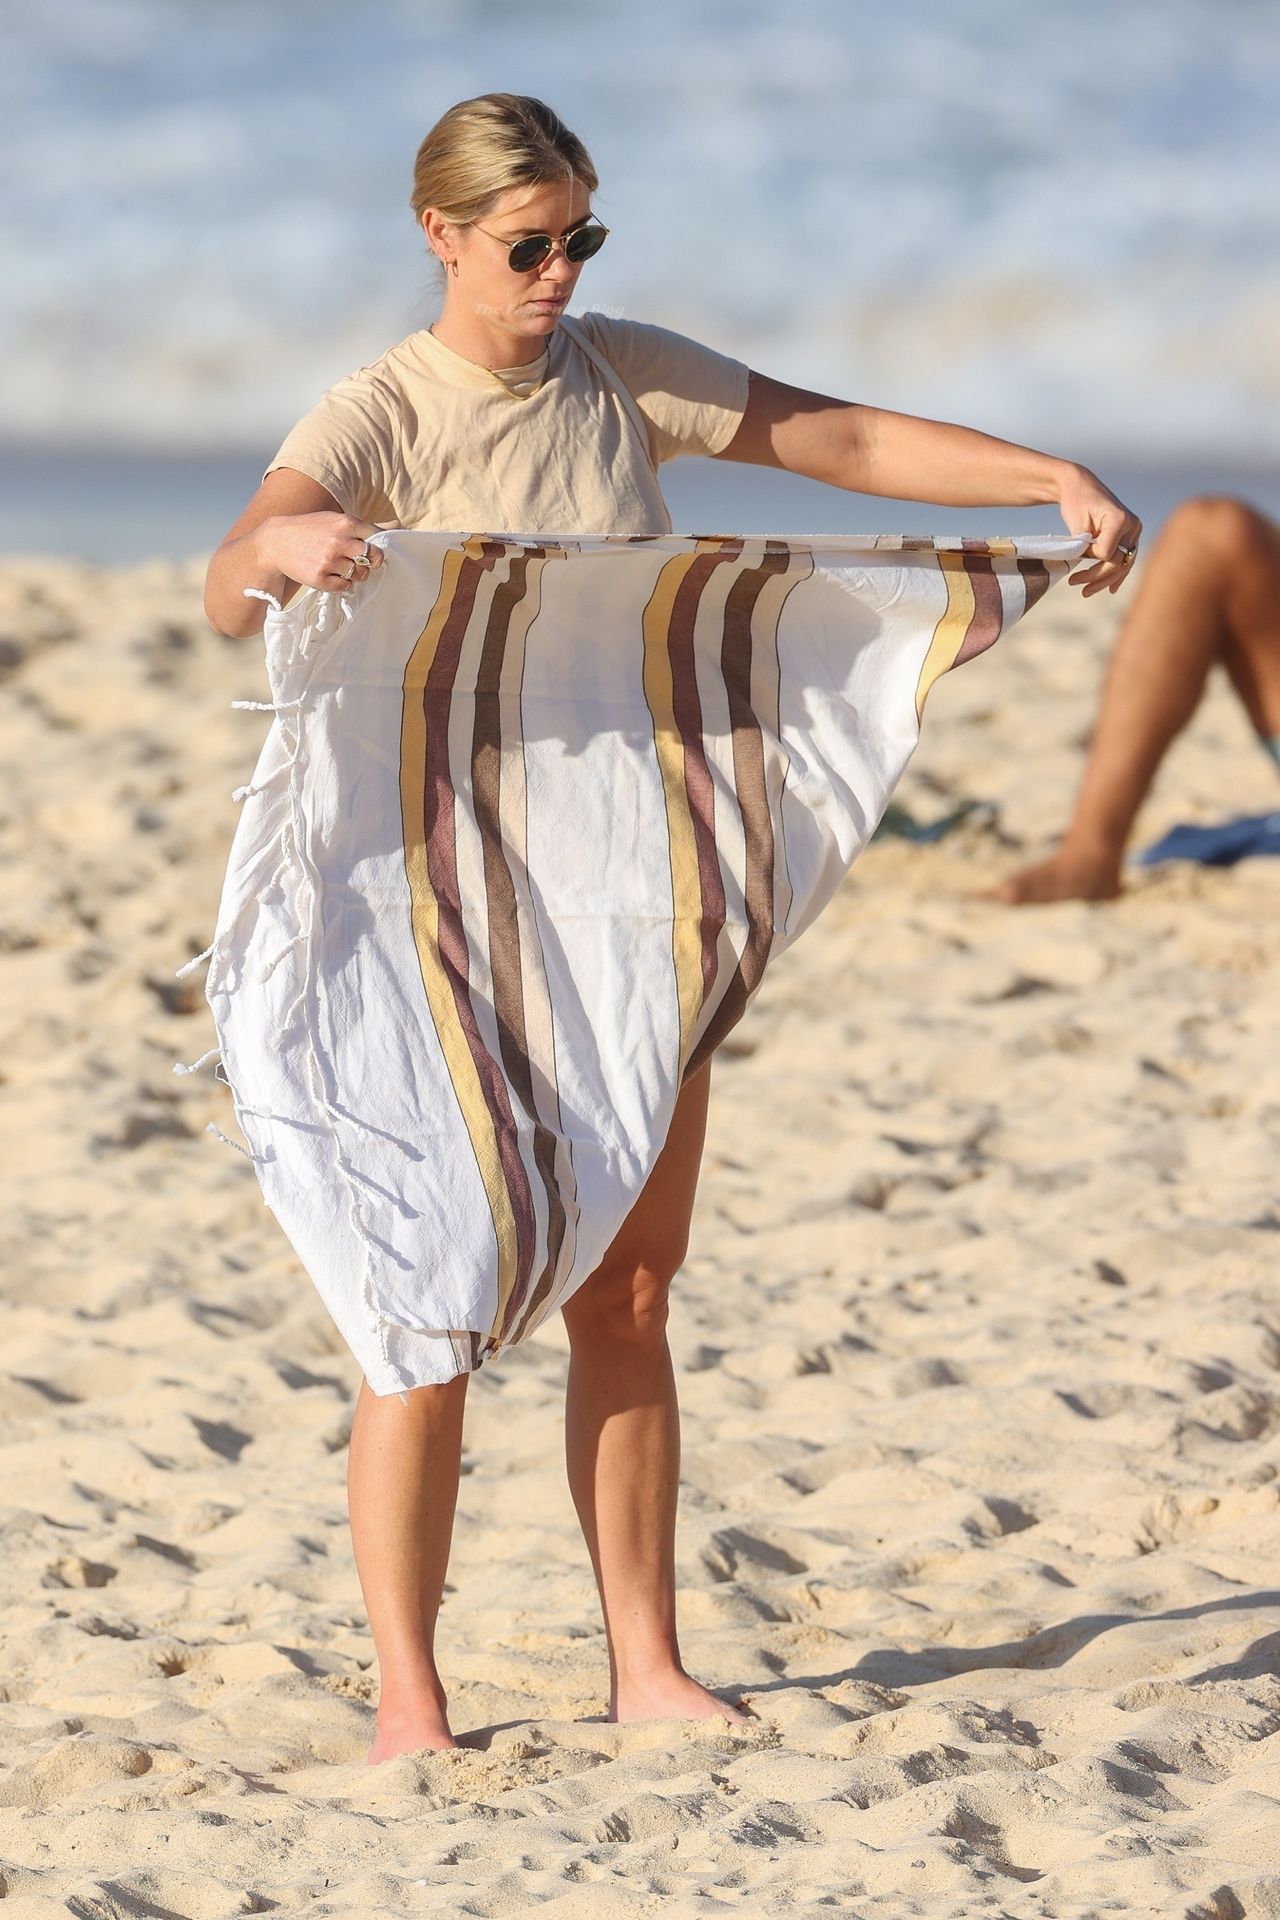 Brittany Hockley Catches Some Sun Rays at Bondi Beach (28 Photos)